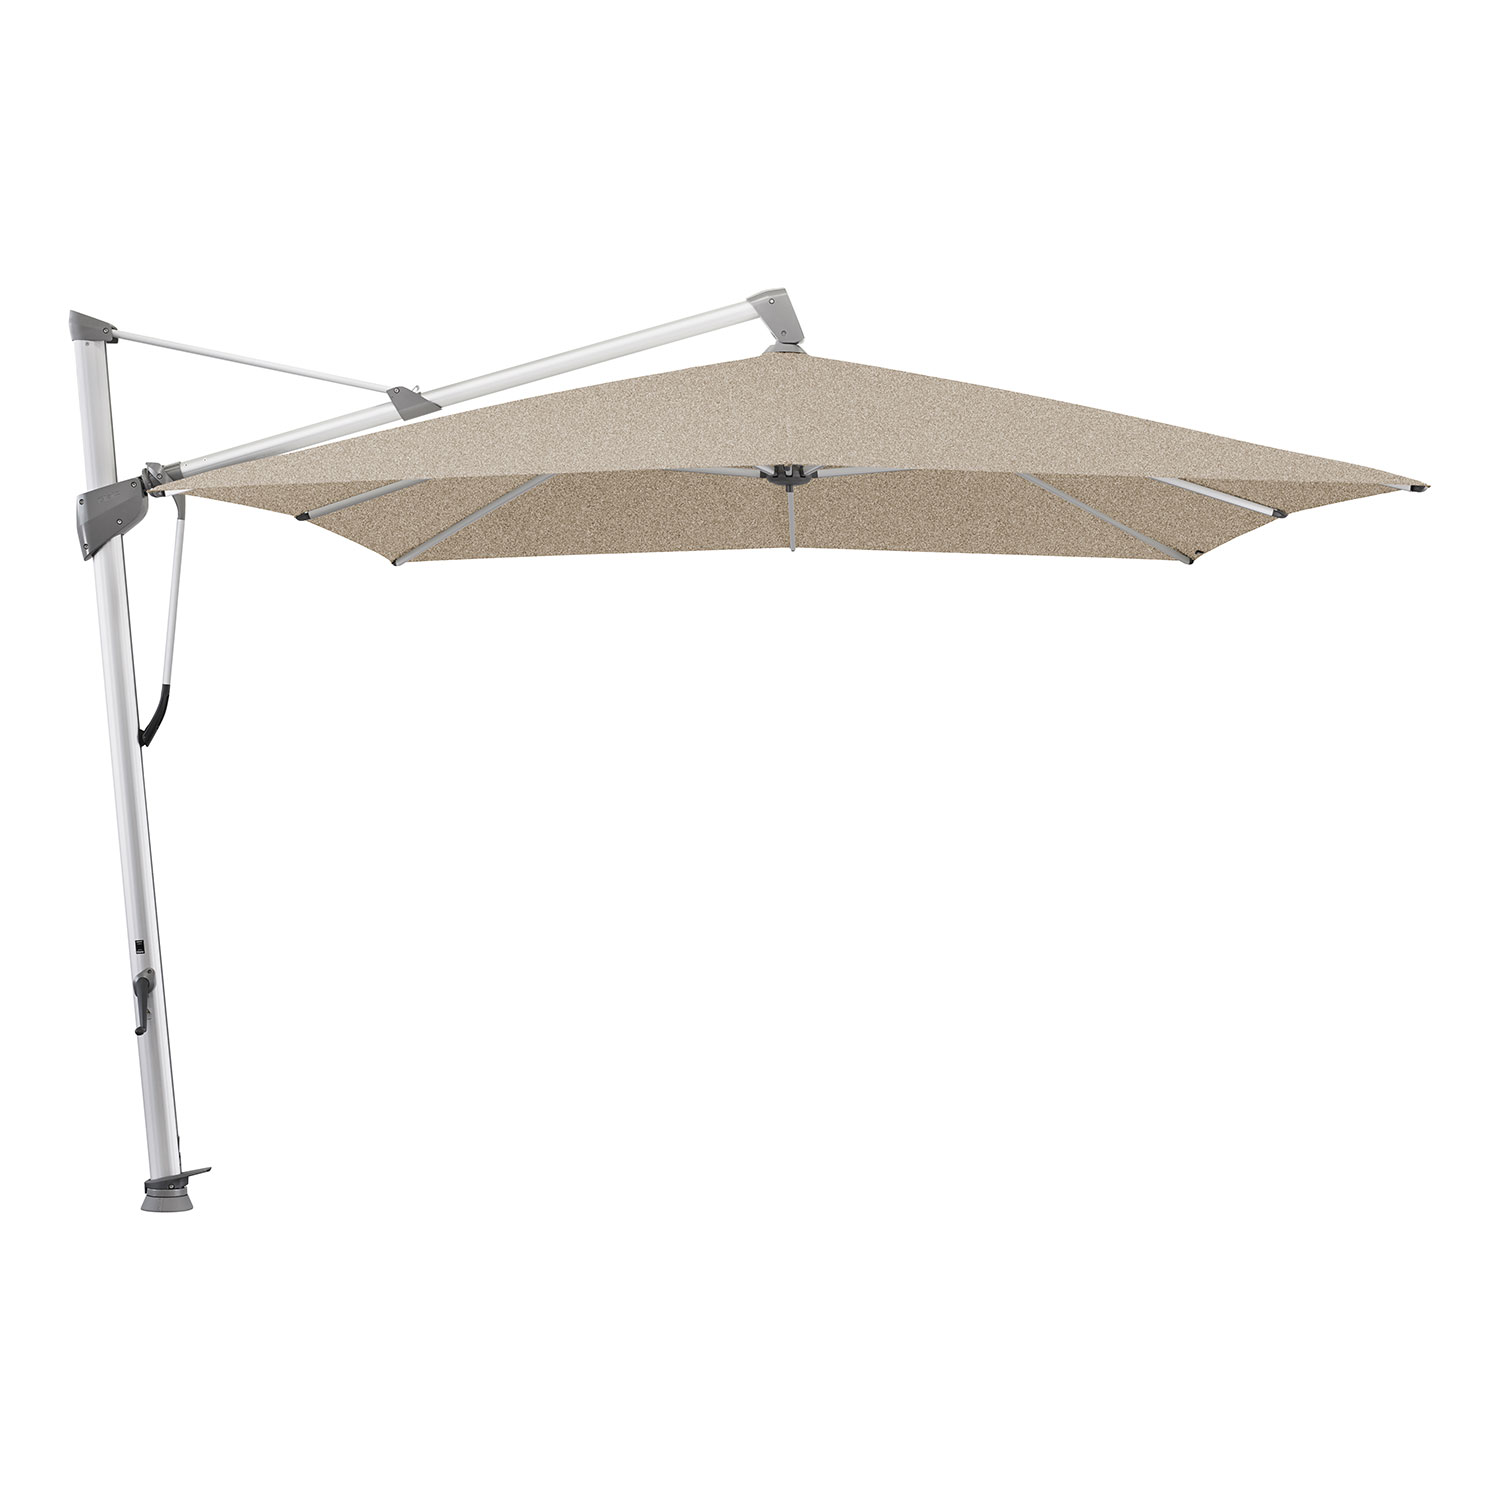 Glatz Sombrano S+ frihängande parasoll 300×300 cm kat.5 anodizerad alu / 650 camel